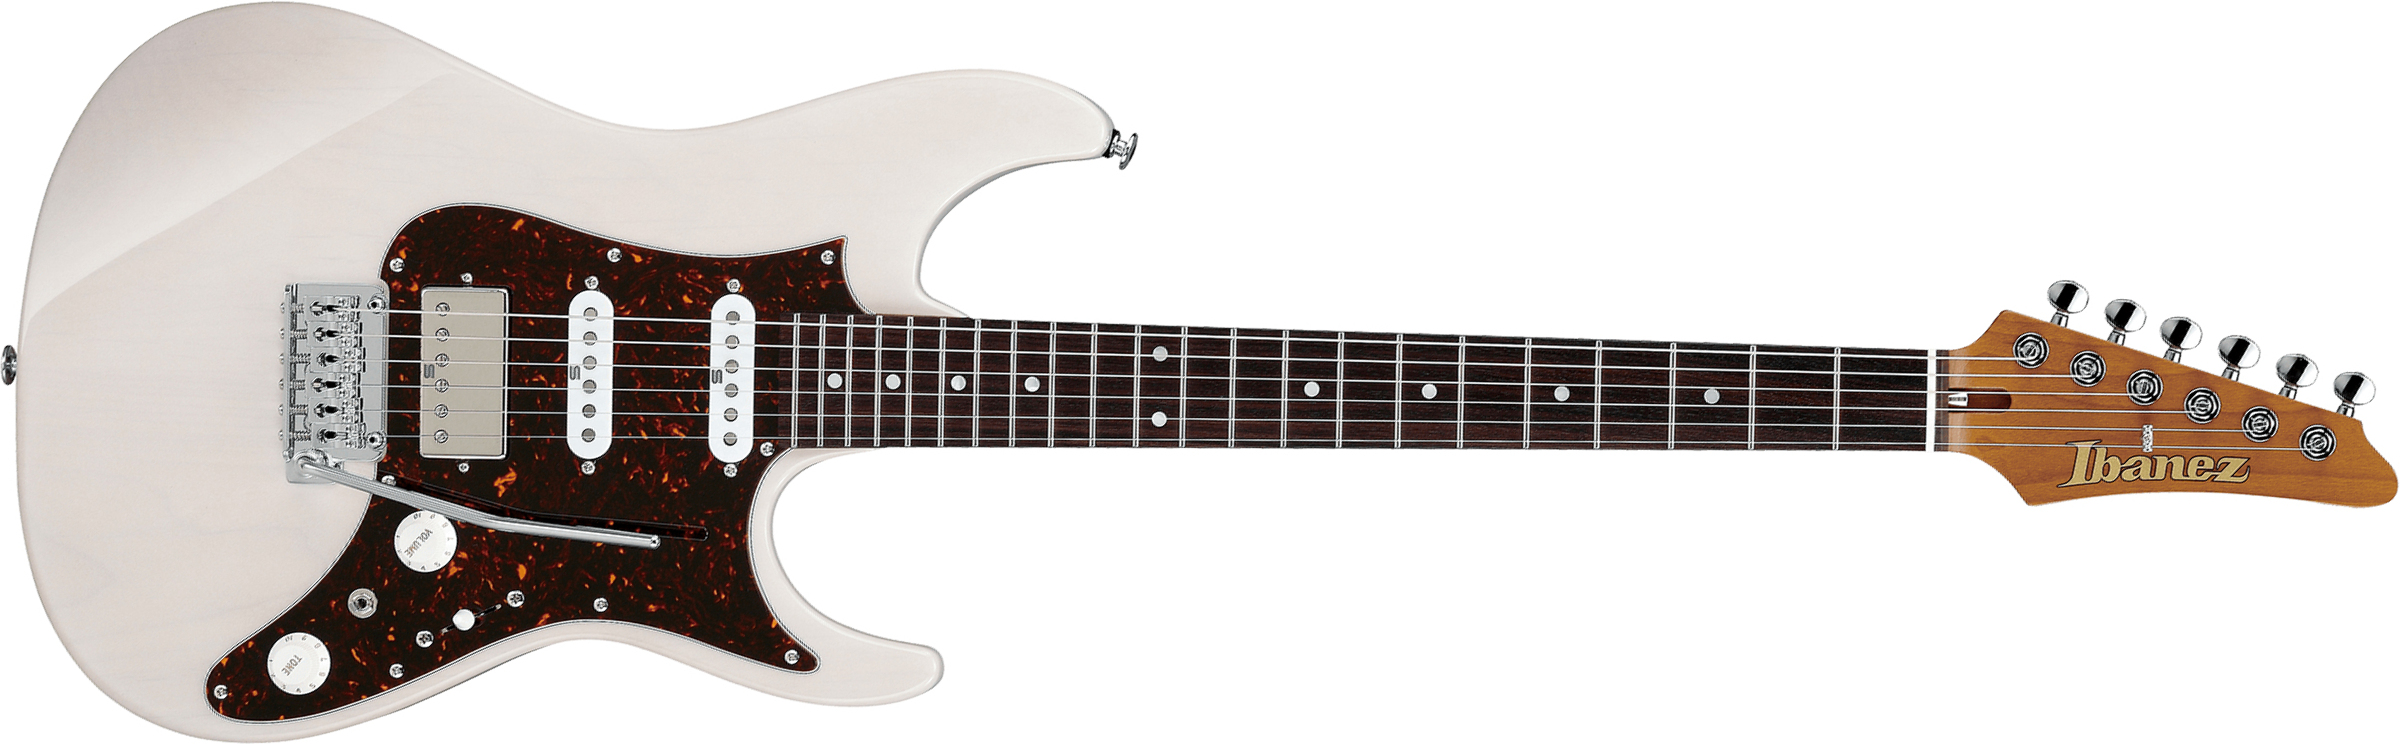 Ibanez Az2204n Awd Prestige Jap Hss Seymour Duncan Trem Rw - Antique White Blonde - E-Gitarre in Str-Form - Main picture